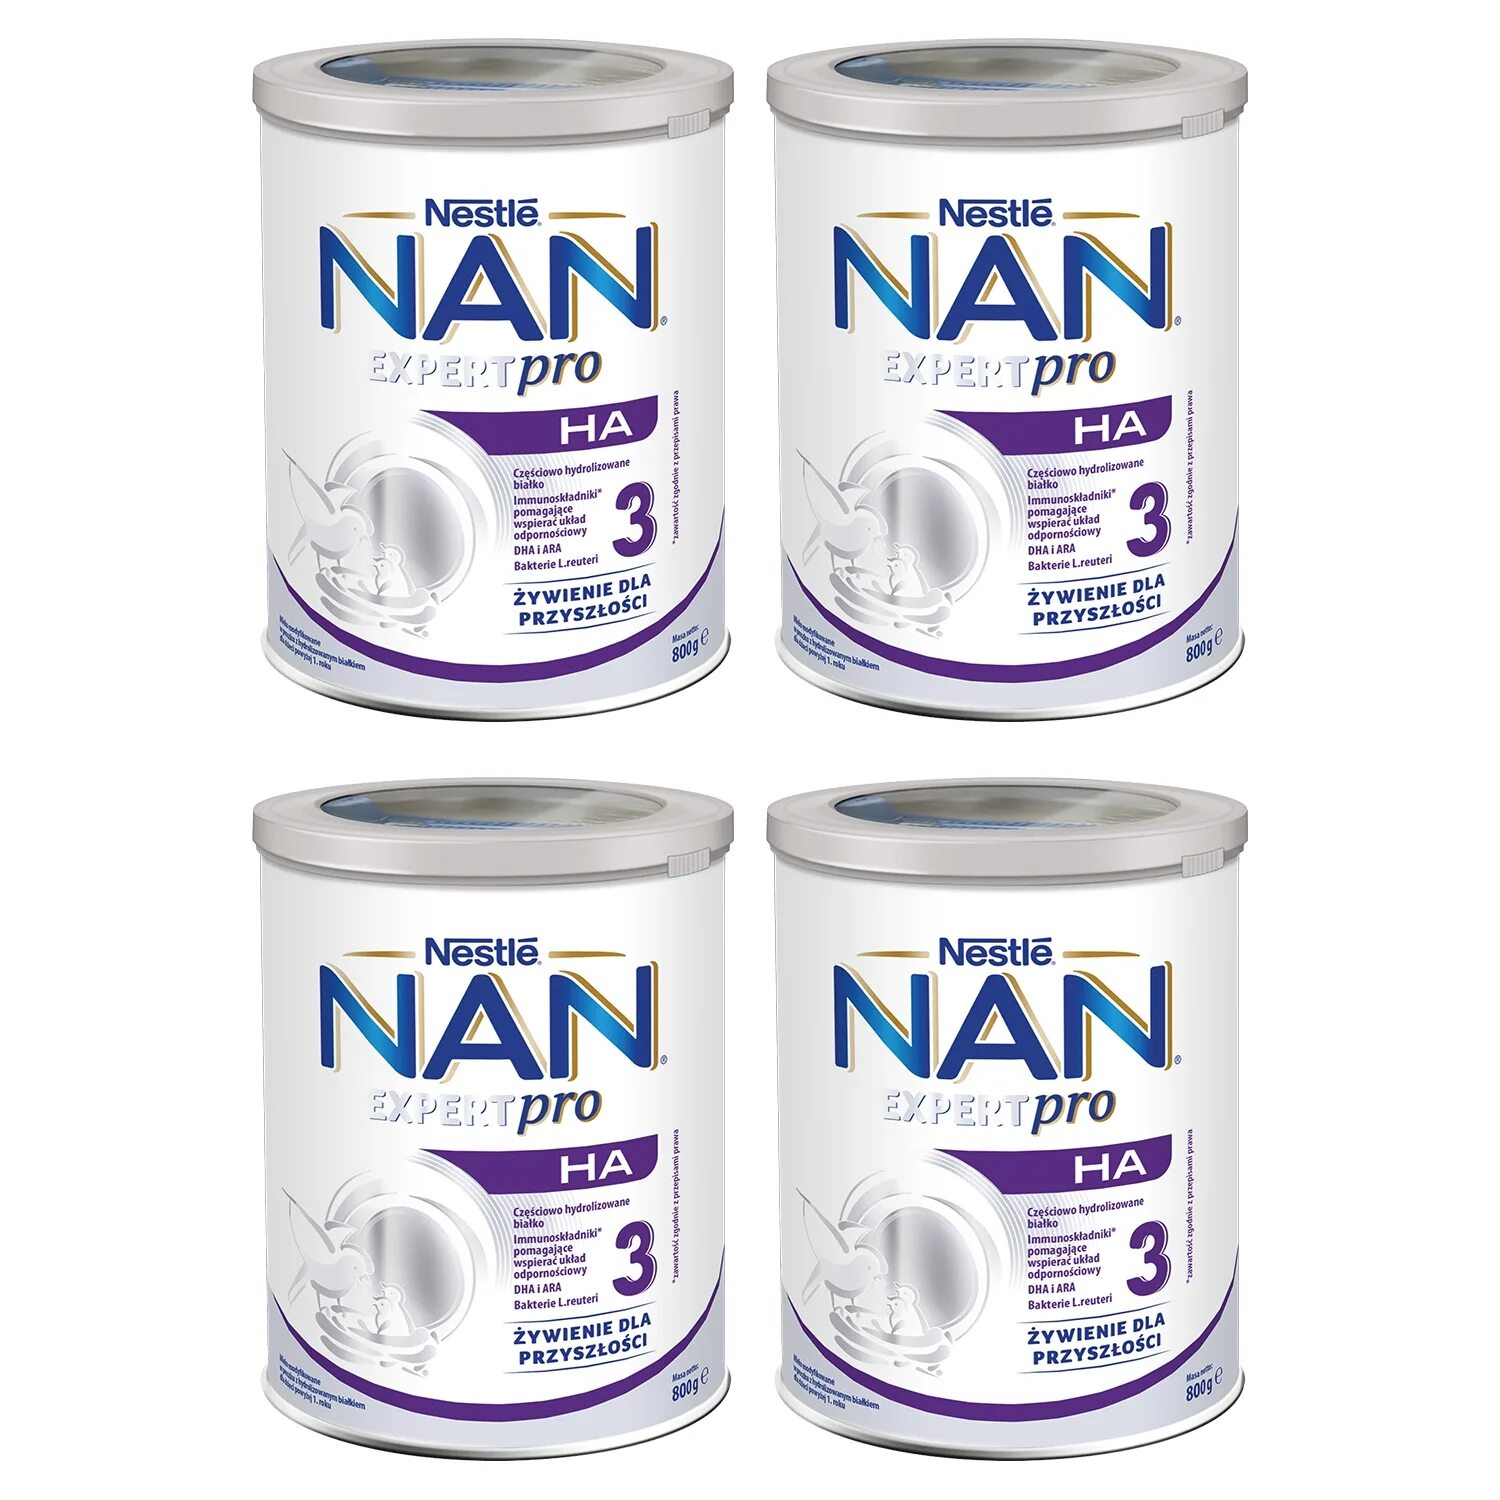 Нан антиаллергия купить. Nestle nan Expert Pro. Nestle nan Expert Pro 400 g. Смесь nan Expert Pro 1. Nan Expert Pro гипоаллергенный 2.